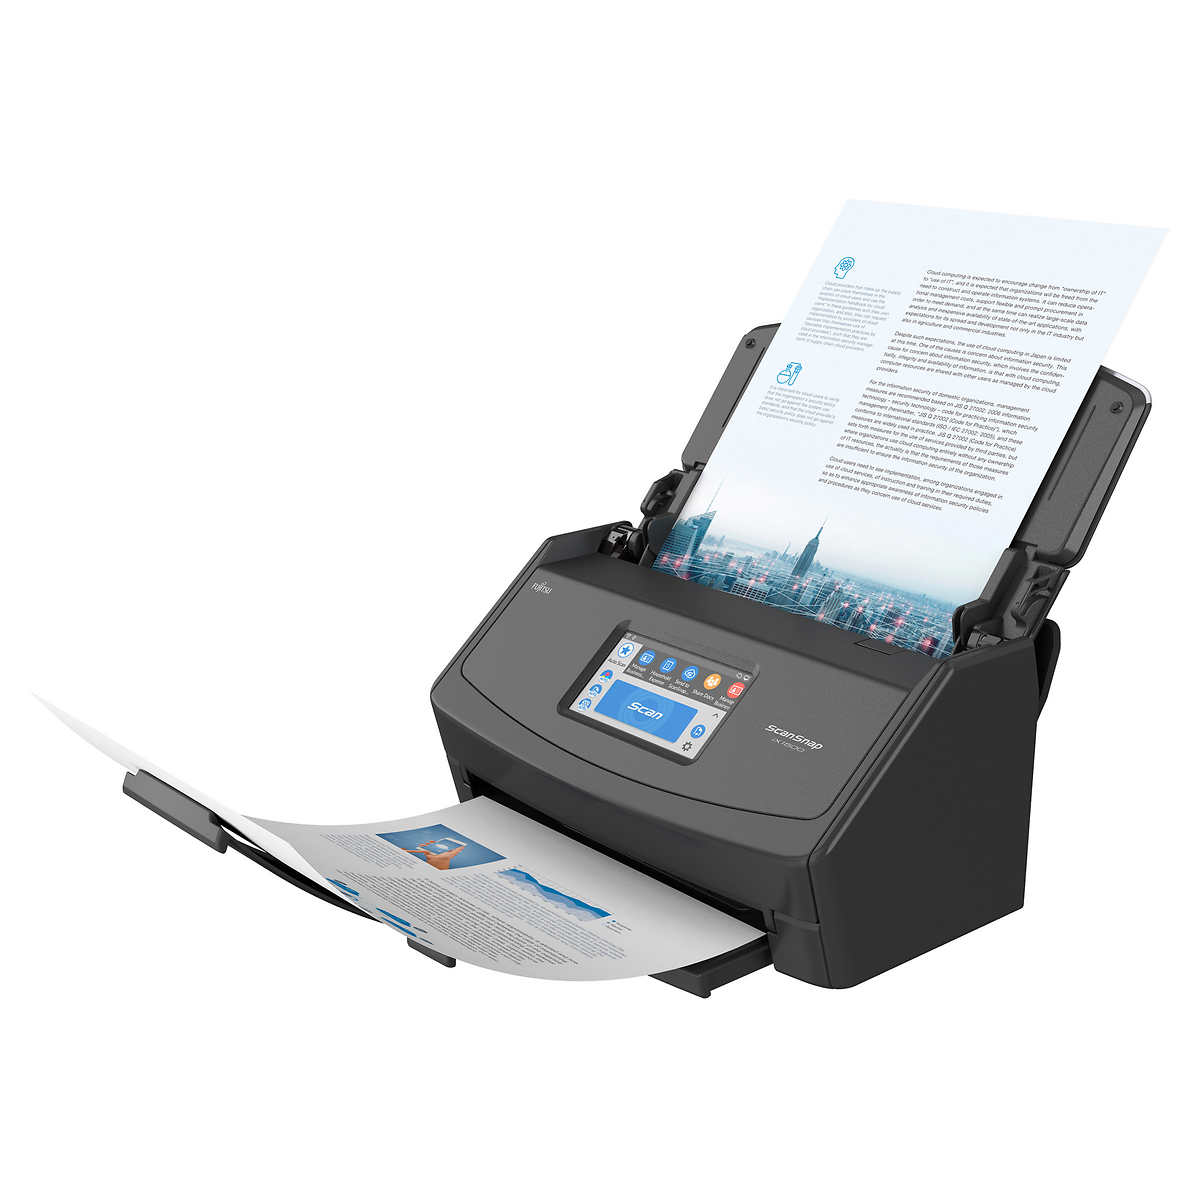 Fujitsu scansnap s1500m instant pdf sheet-fed scanner for the macintosh